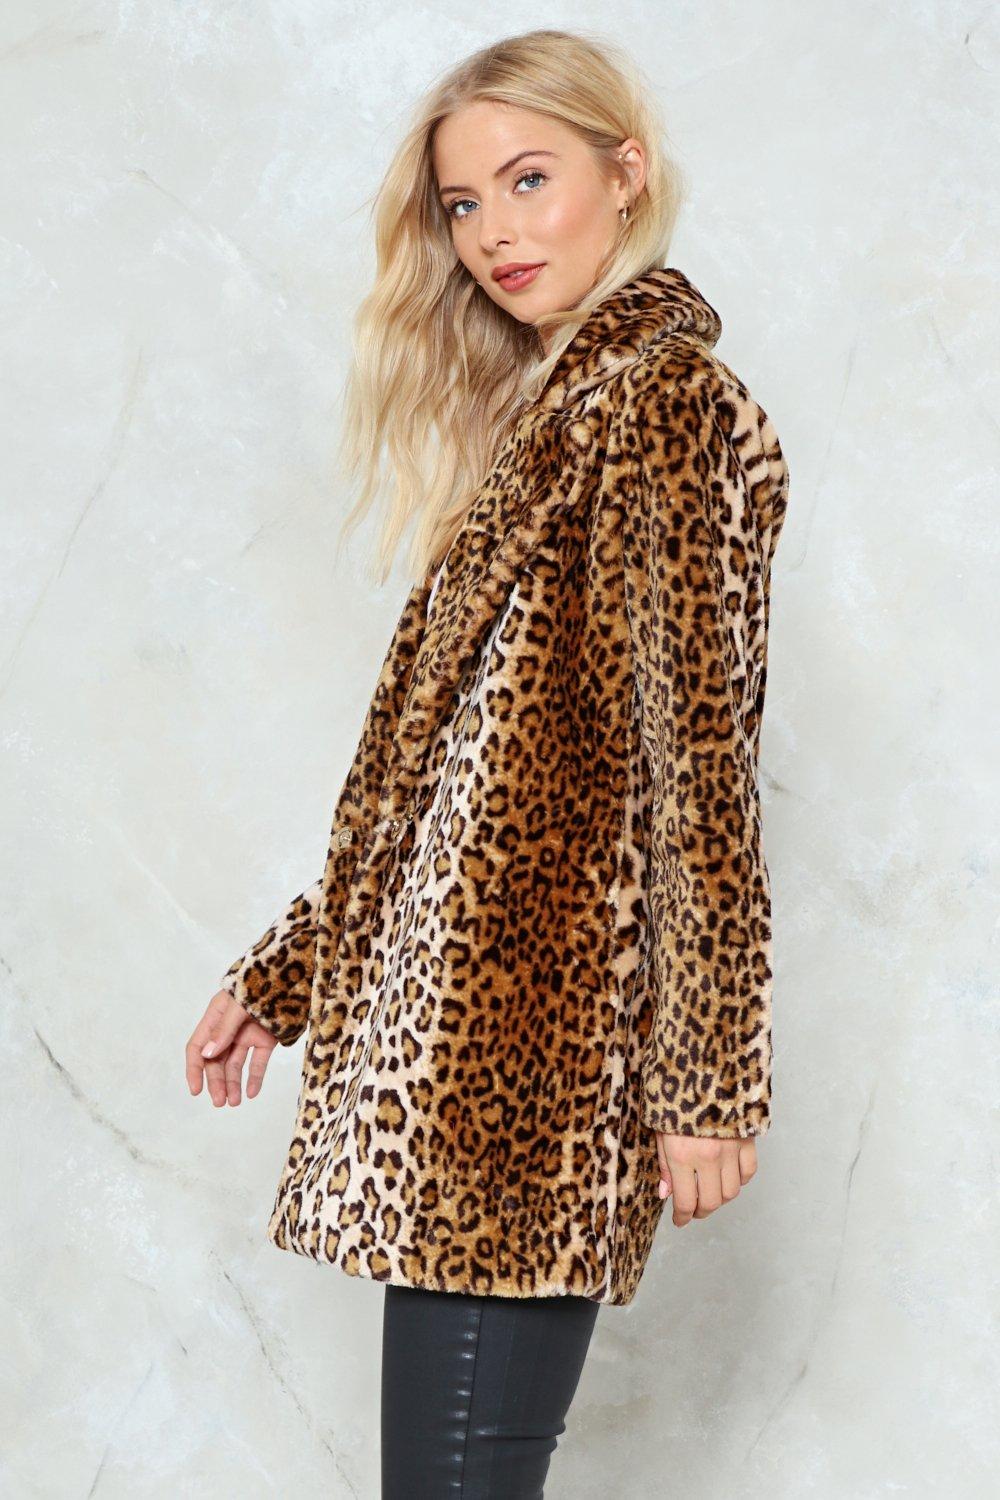 cheetah fur jacket